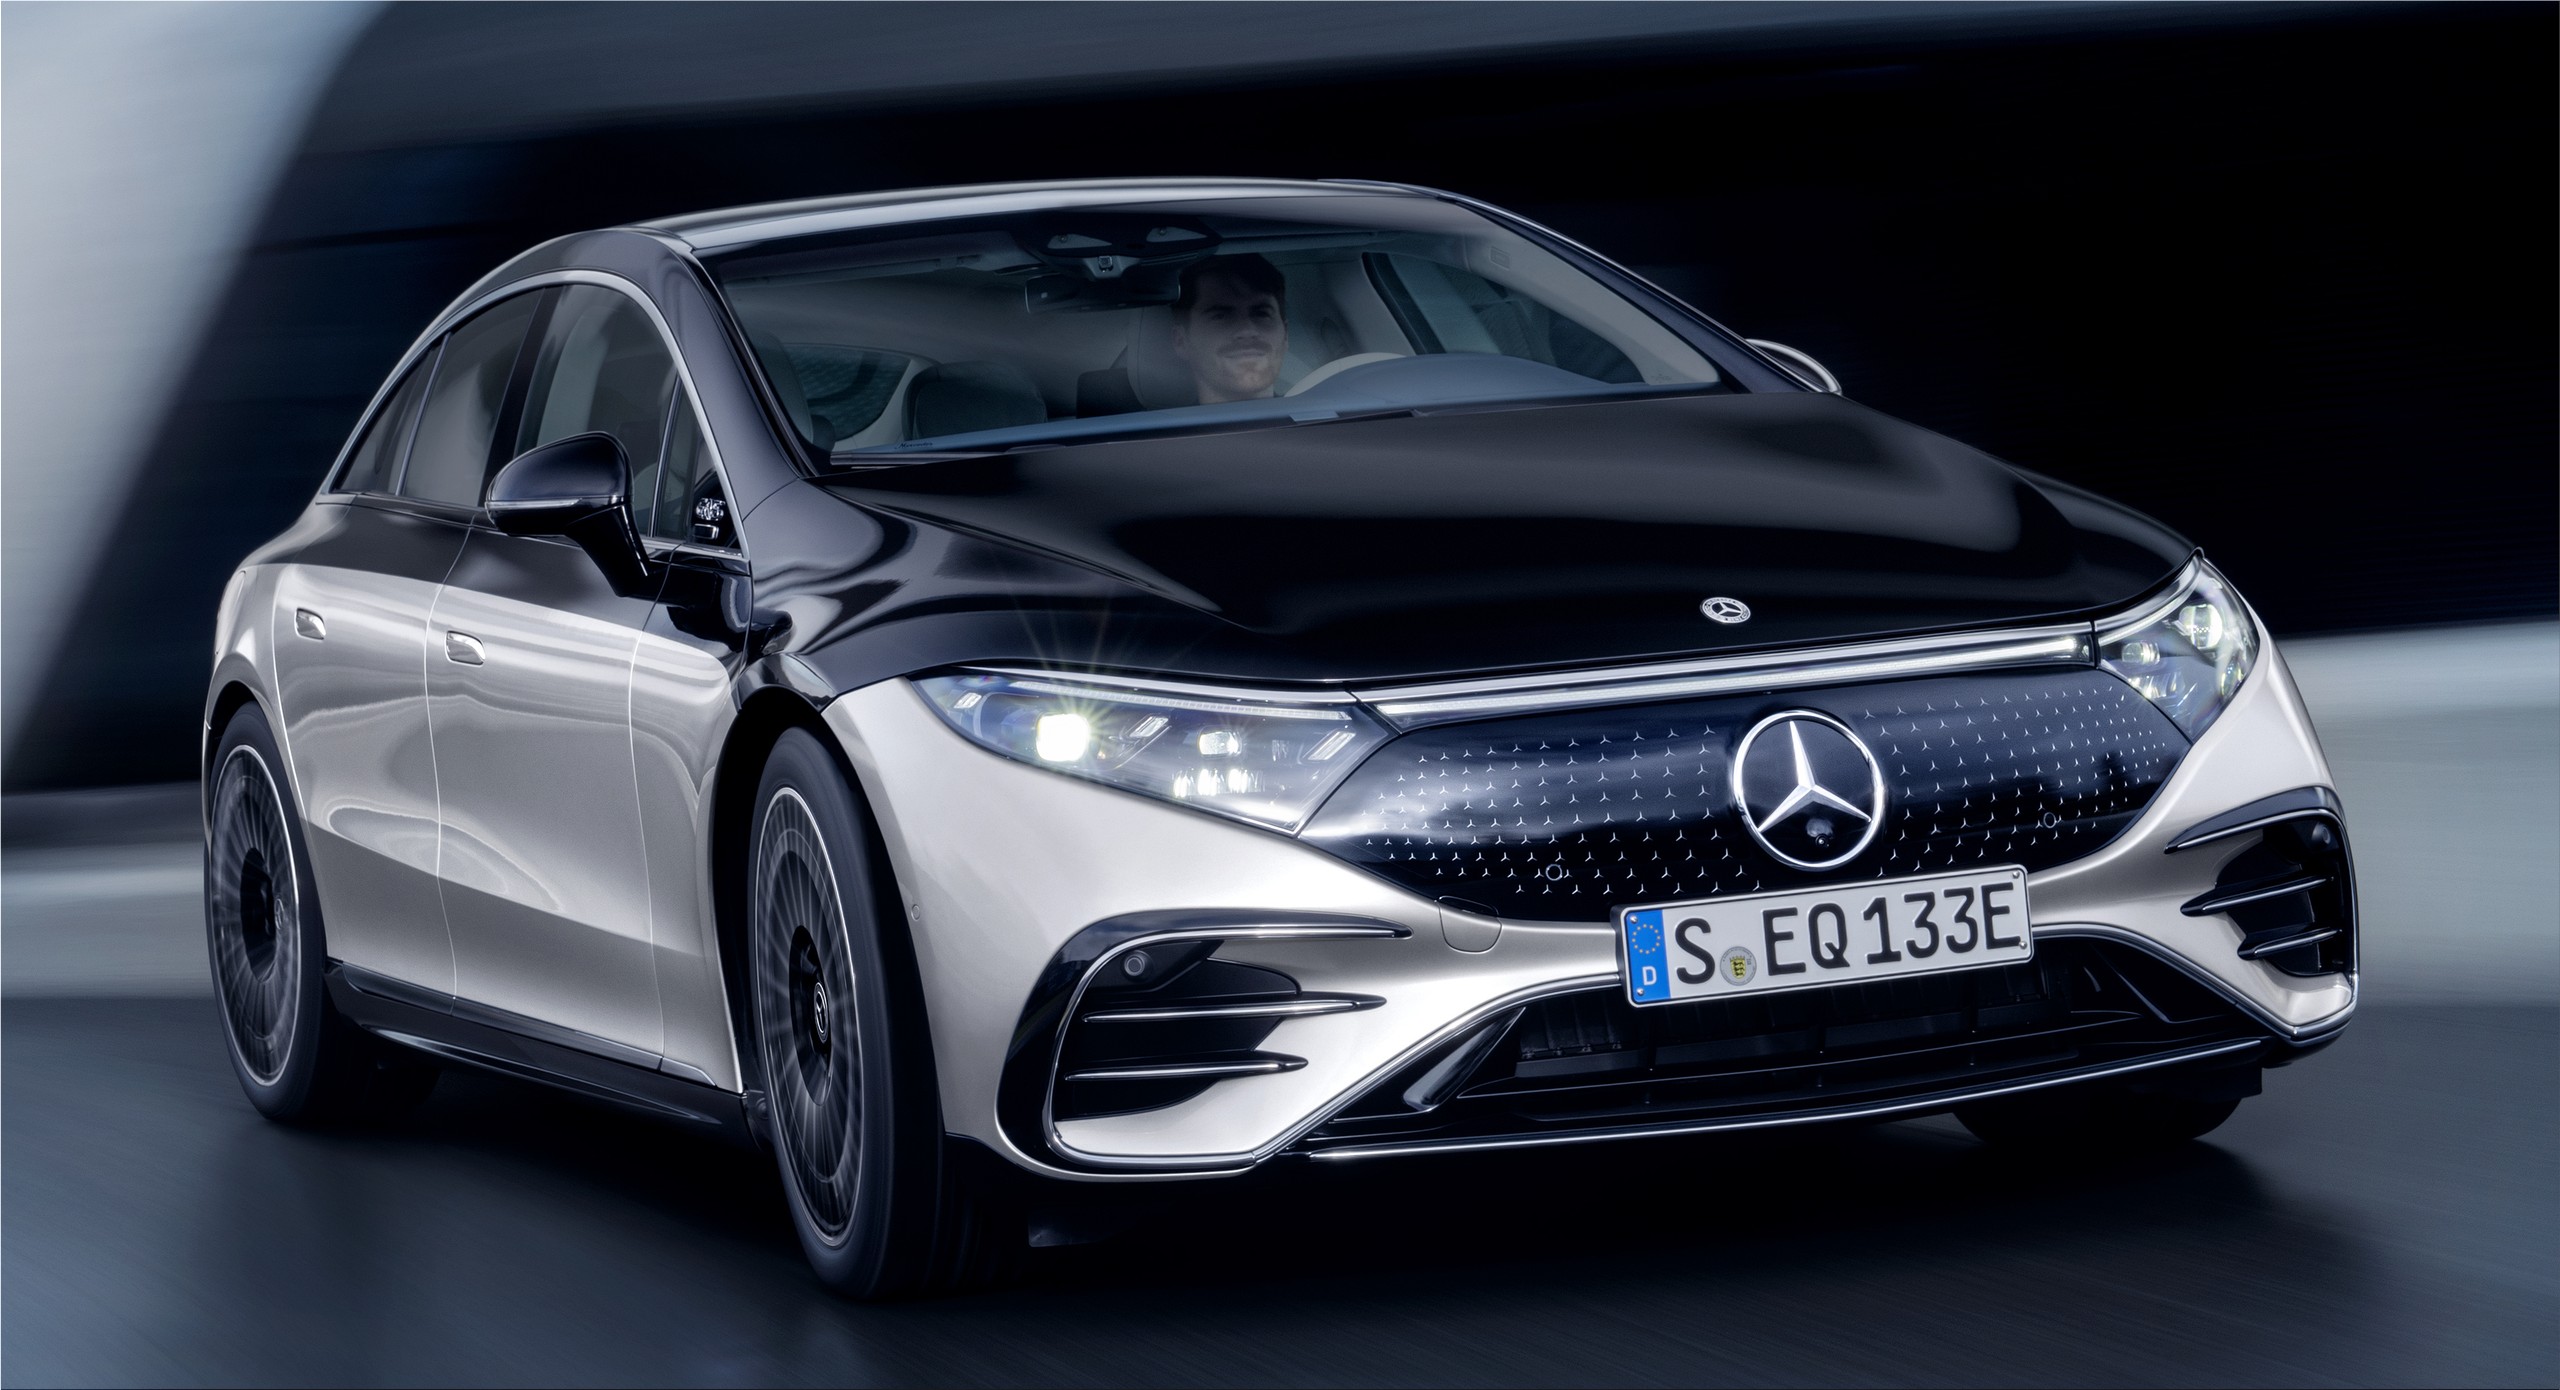 The new Mercedes-Benz EQS electric car starts at 106,000 euros